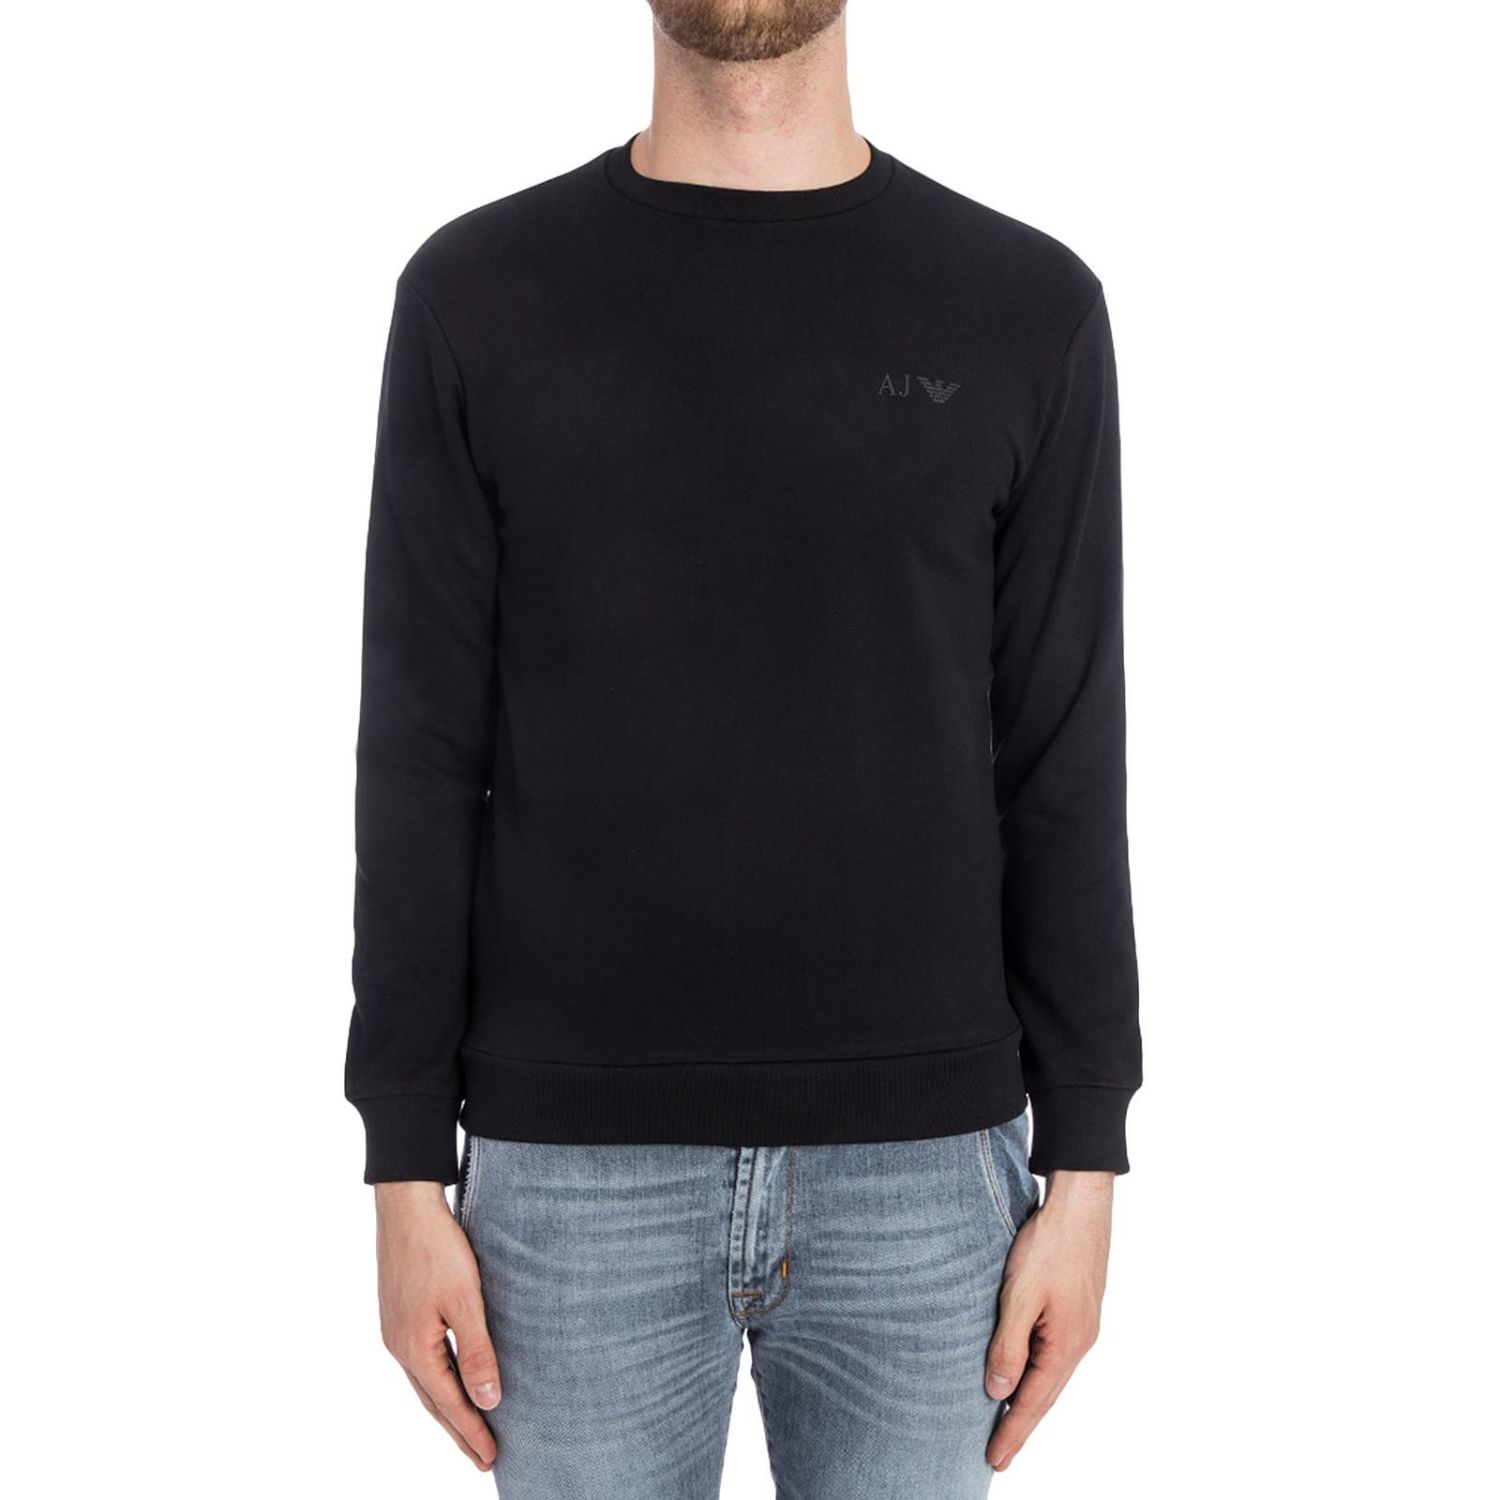 Armani Jeans Outlet: Sweatshirt men - Black | Sweatshirt Armani Jeans ...